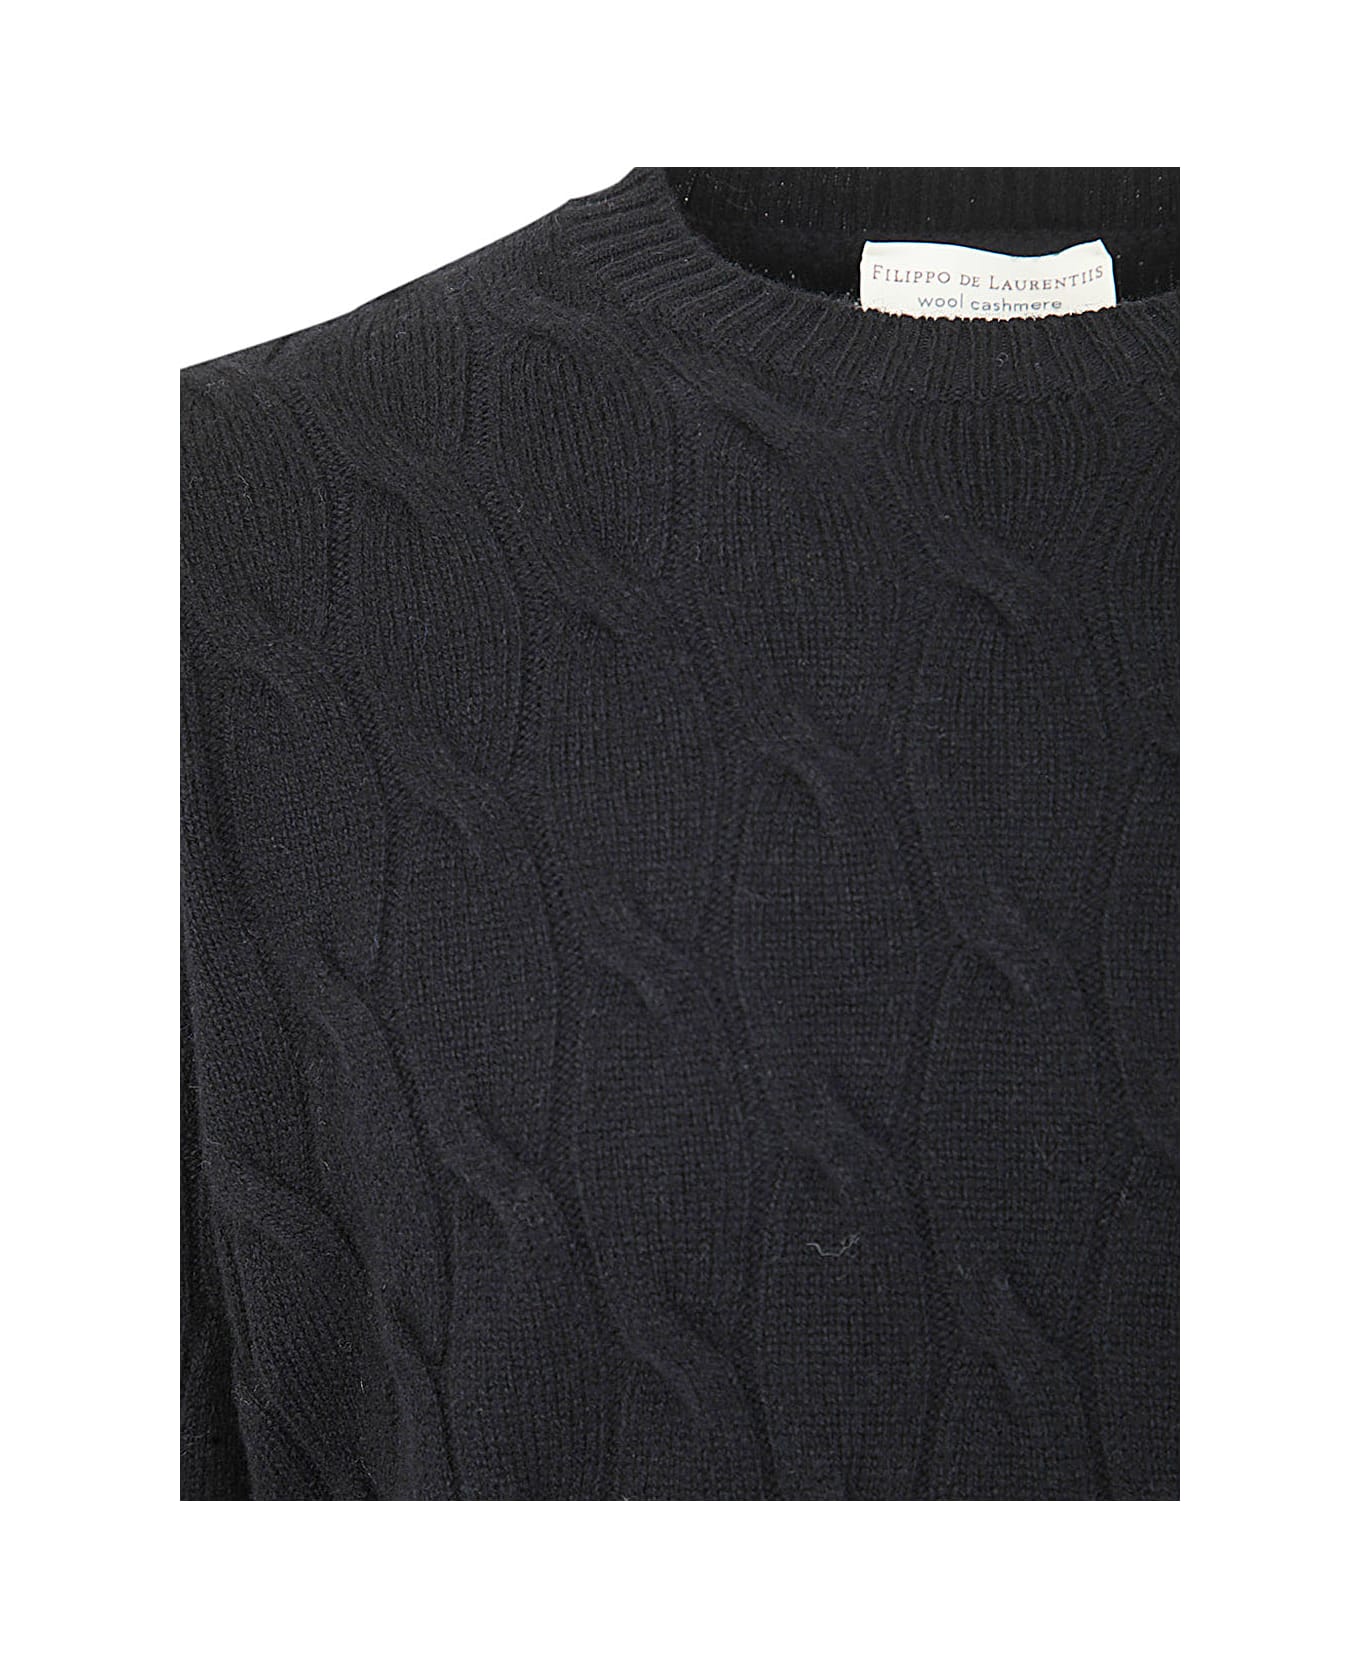 Filippo De Laurentiis Wool Cashmere Long Sleeves Crew Neck Sweater With Braid - Black